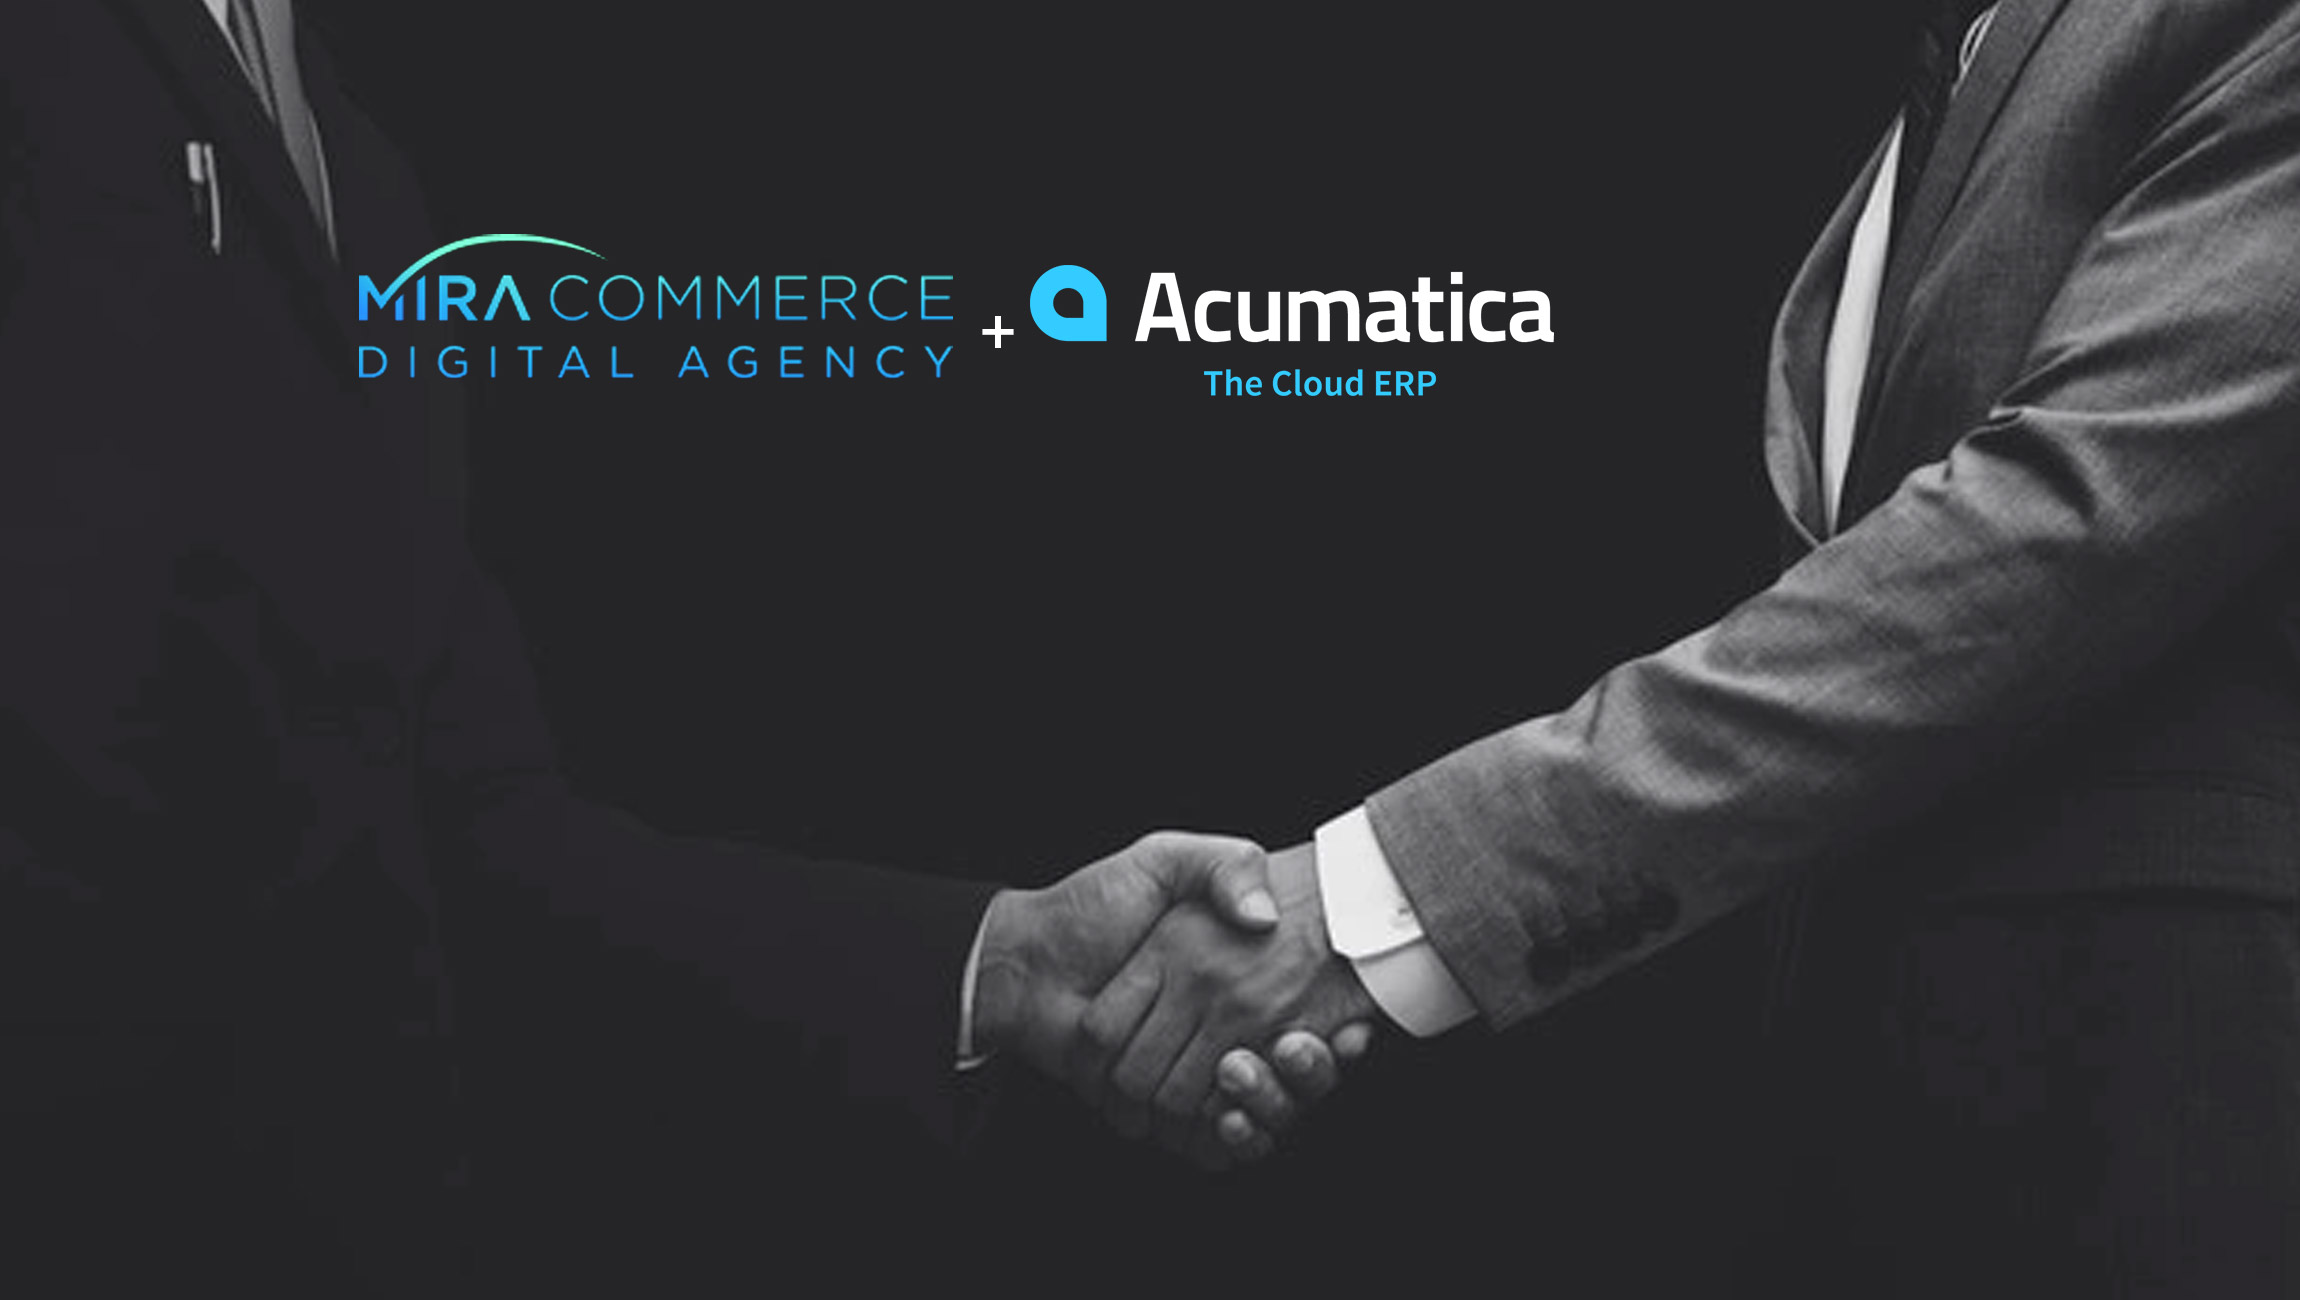 Mira-Commerce-Digital-Agency-Announces-Partnership-with-Acumatica